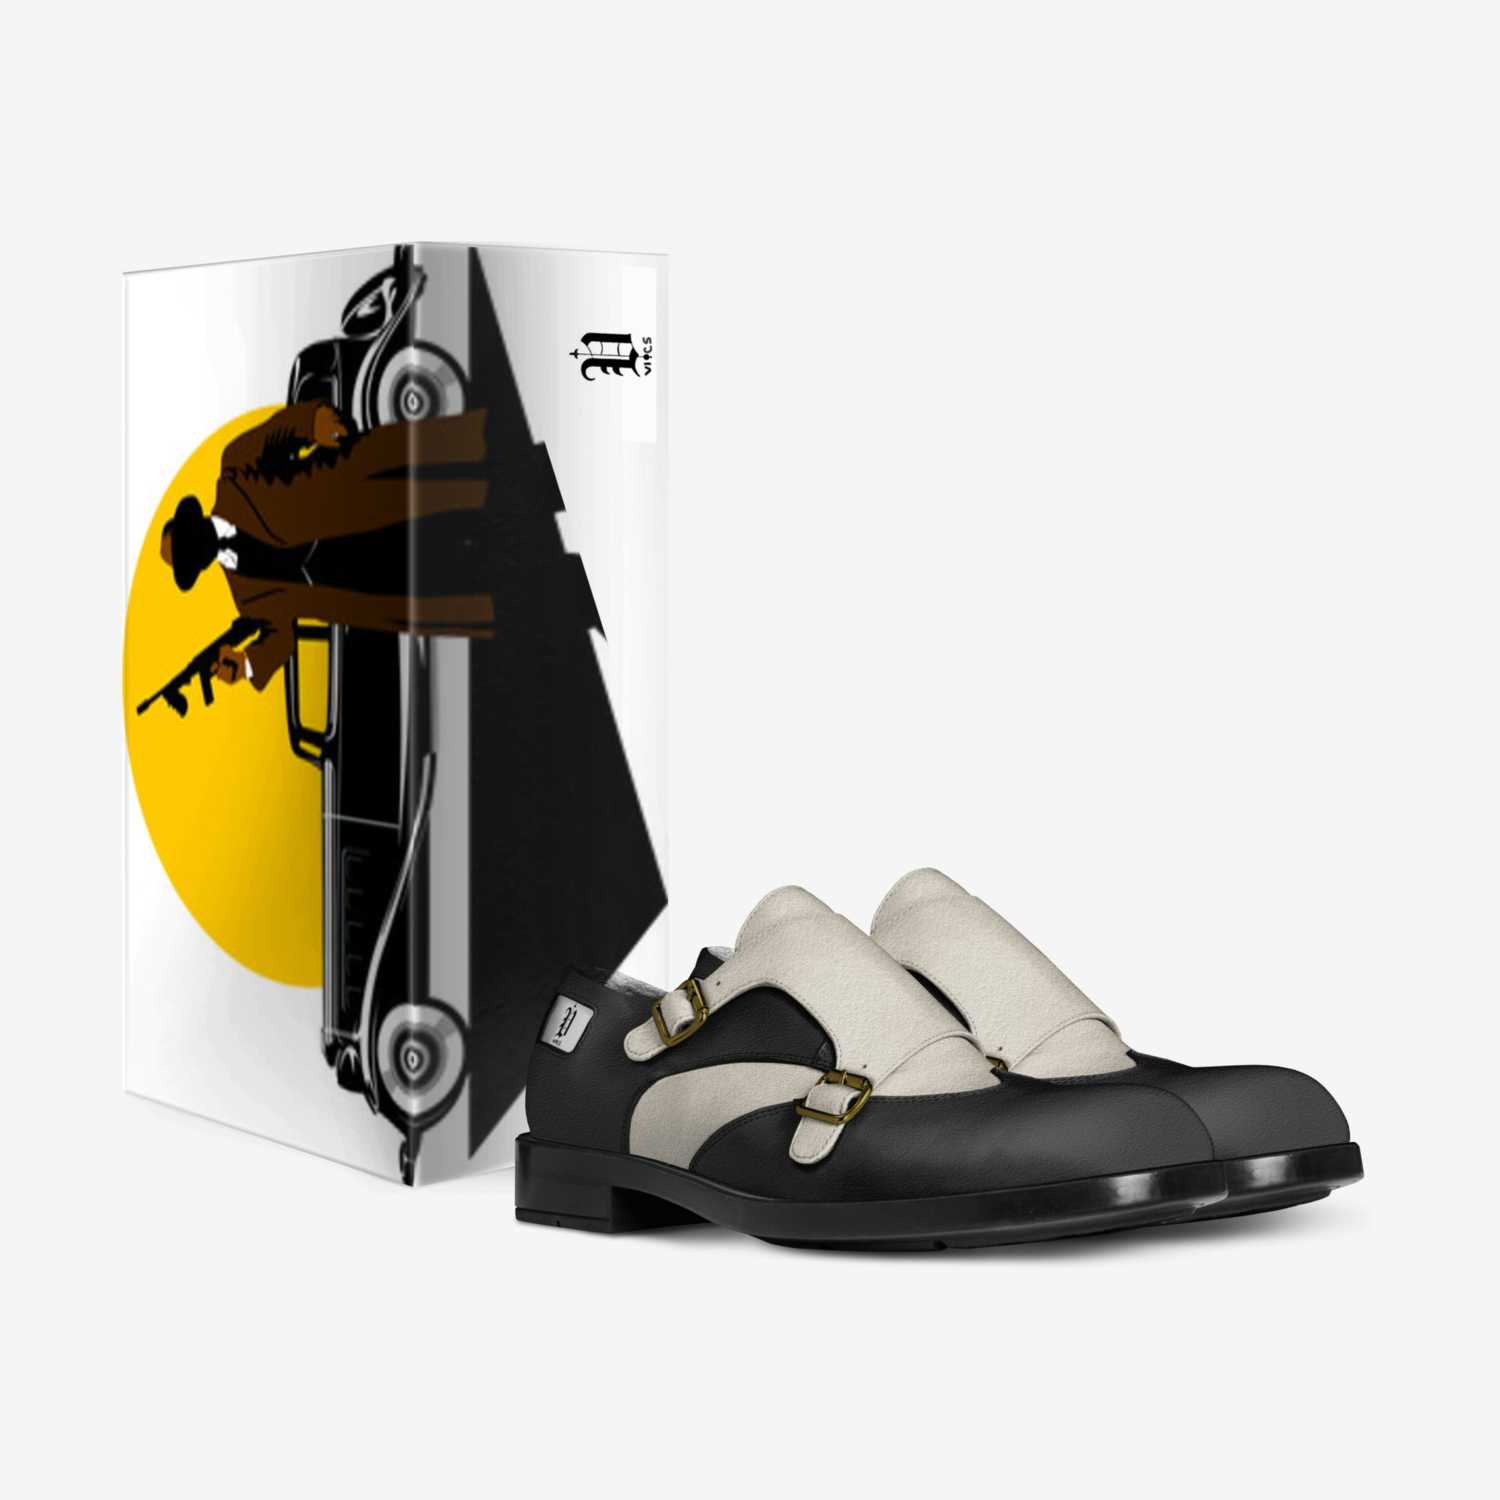 vics mafia 2 custom made in Italy shoes by Brayden Murphy | Box view